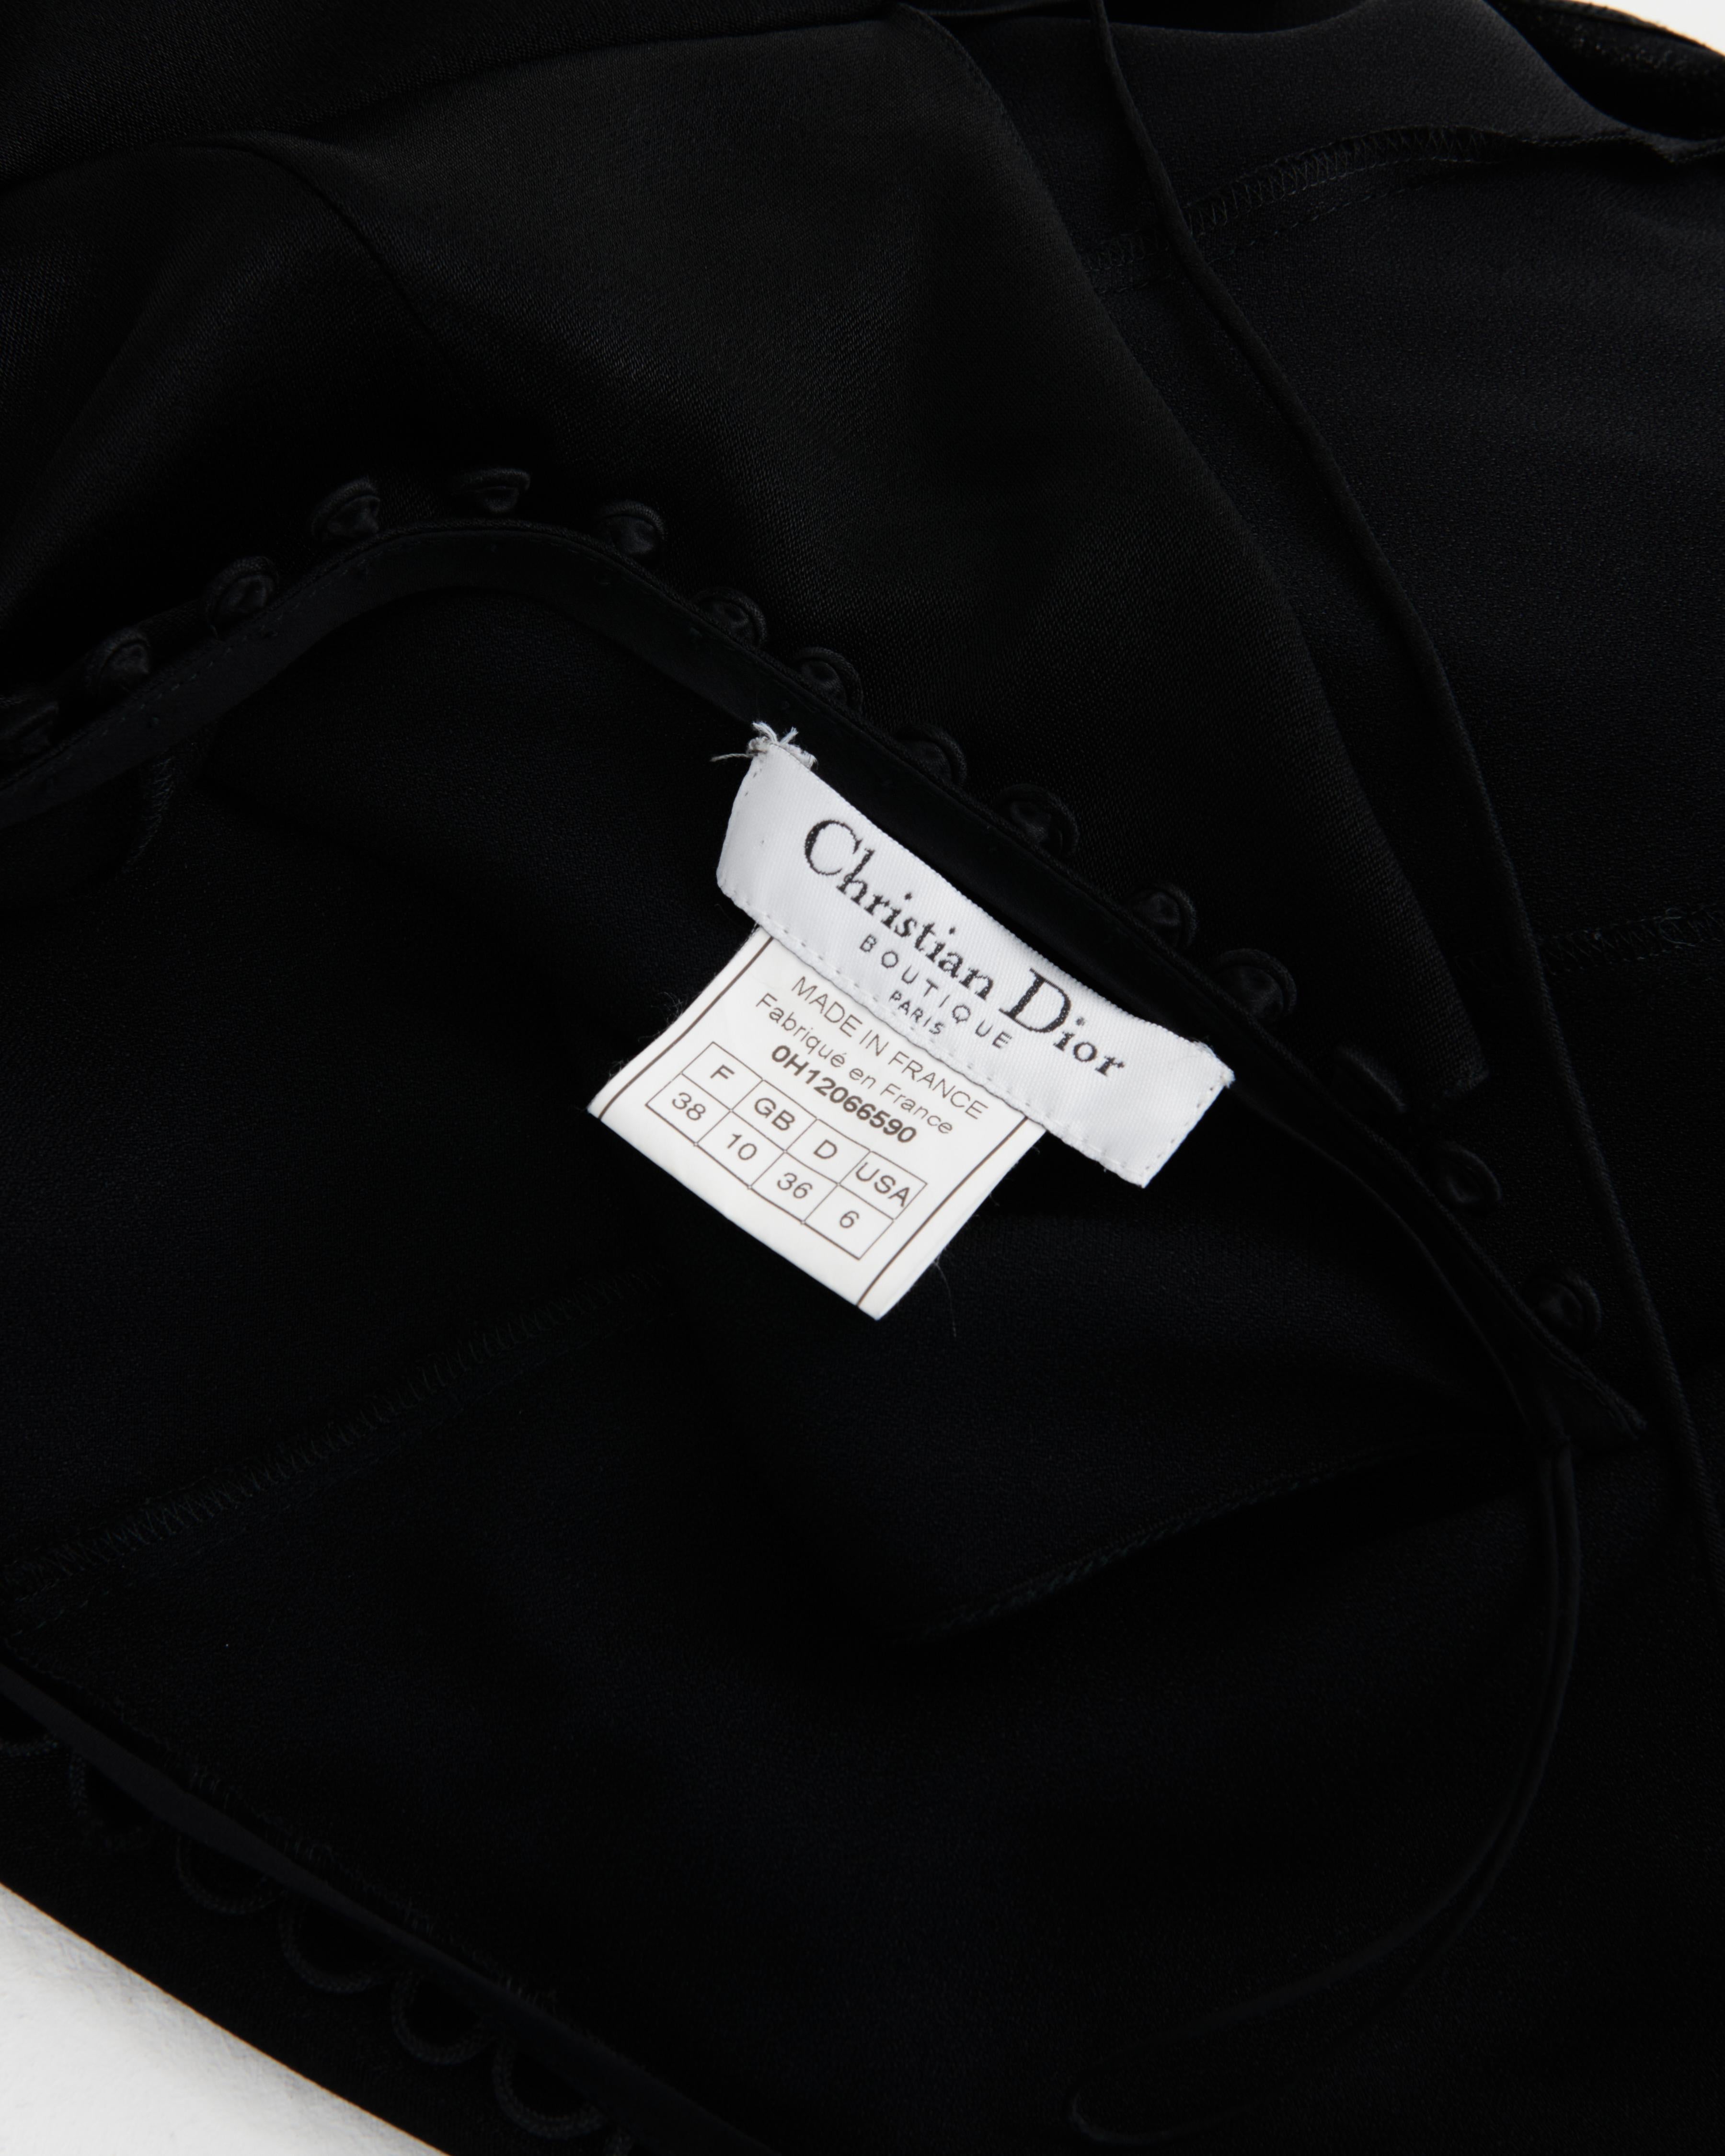 Christian Dior by John Galliano F/W 2000 Black bias-cut trained evening dress For Sale 6